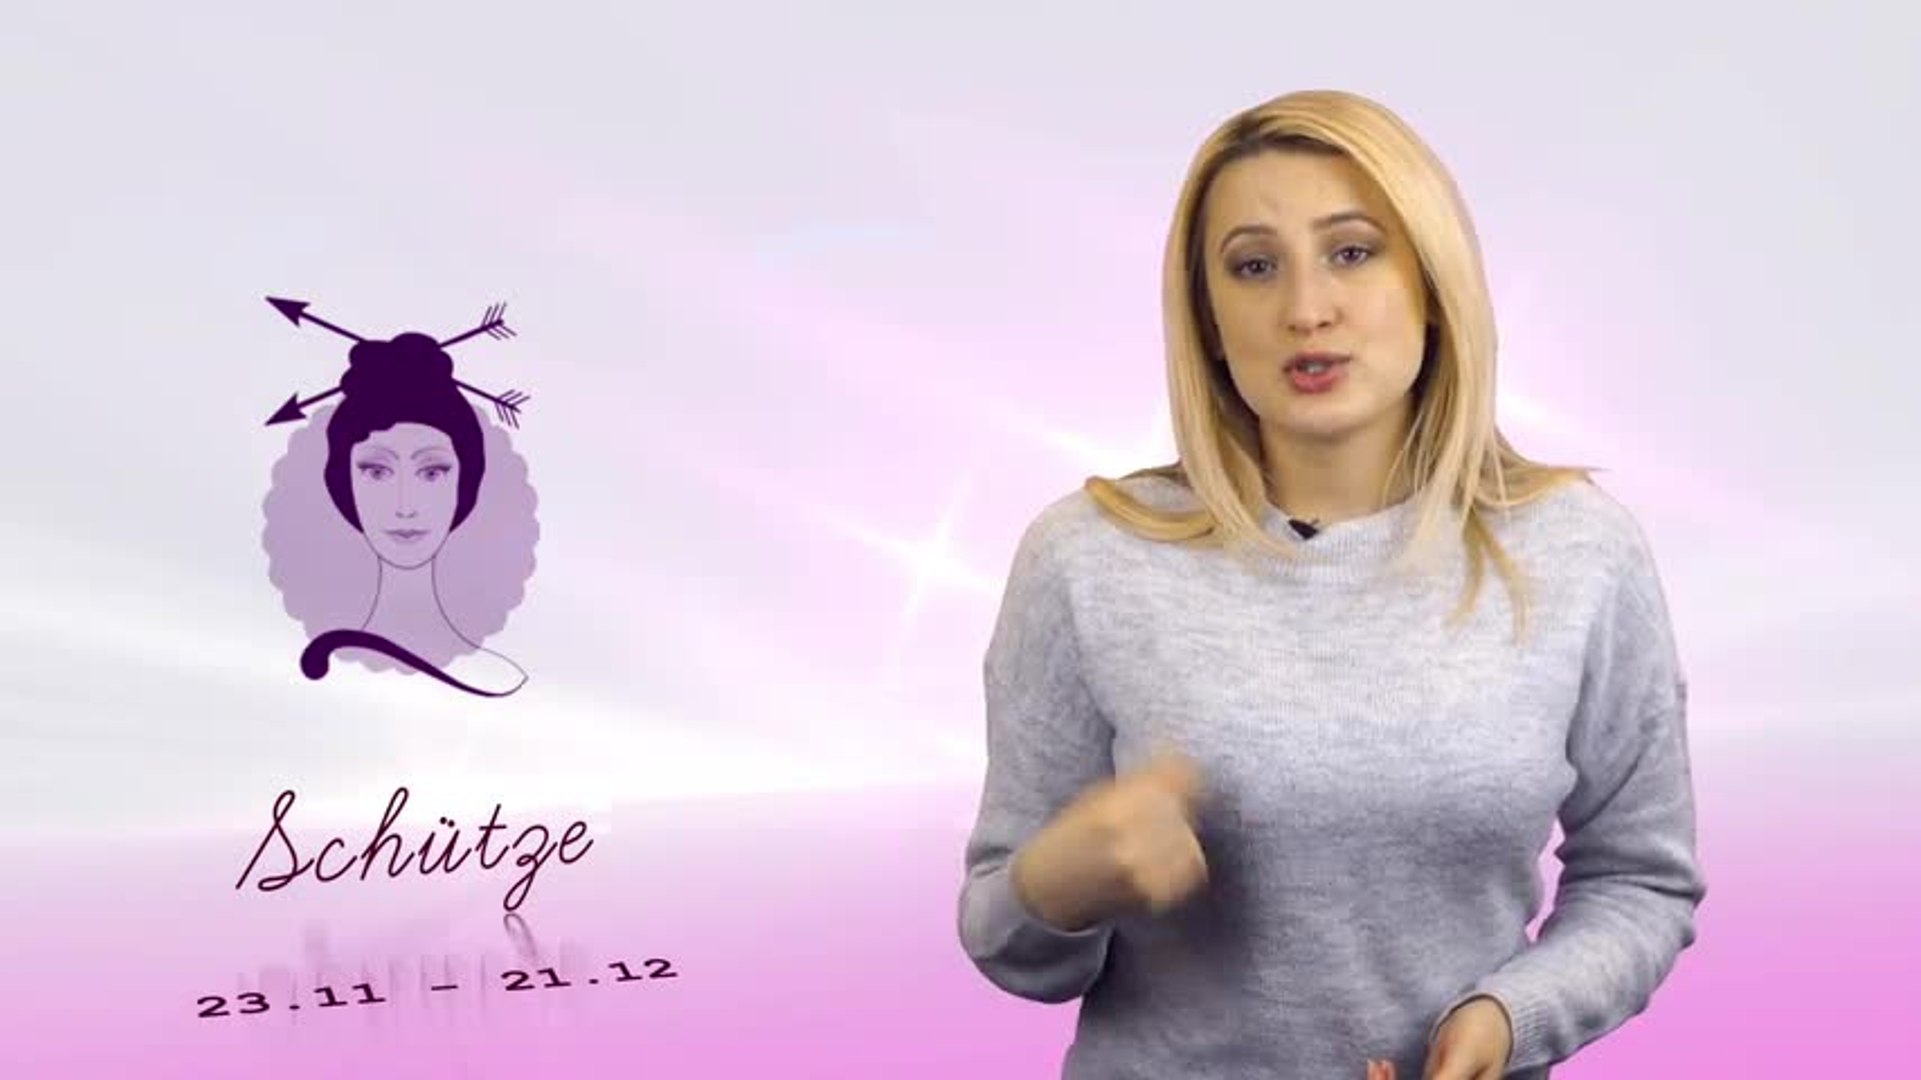 Video-Horoskop für Januar 2019: Schütze - video Dailymotion